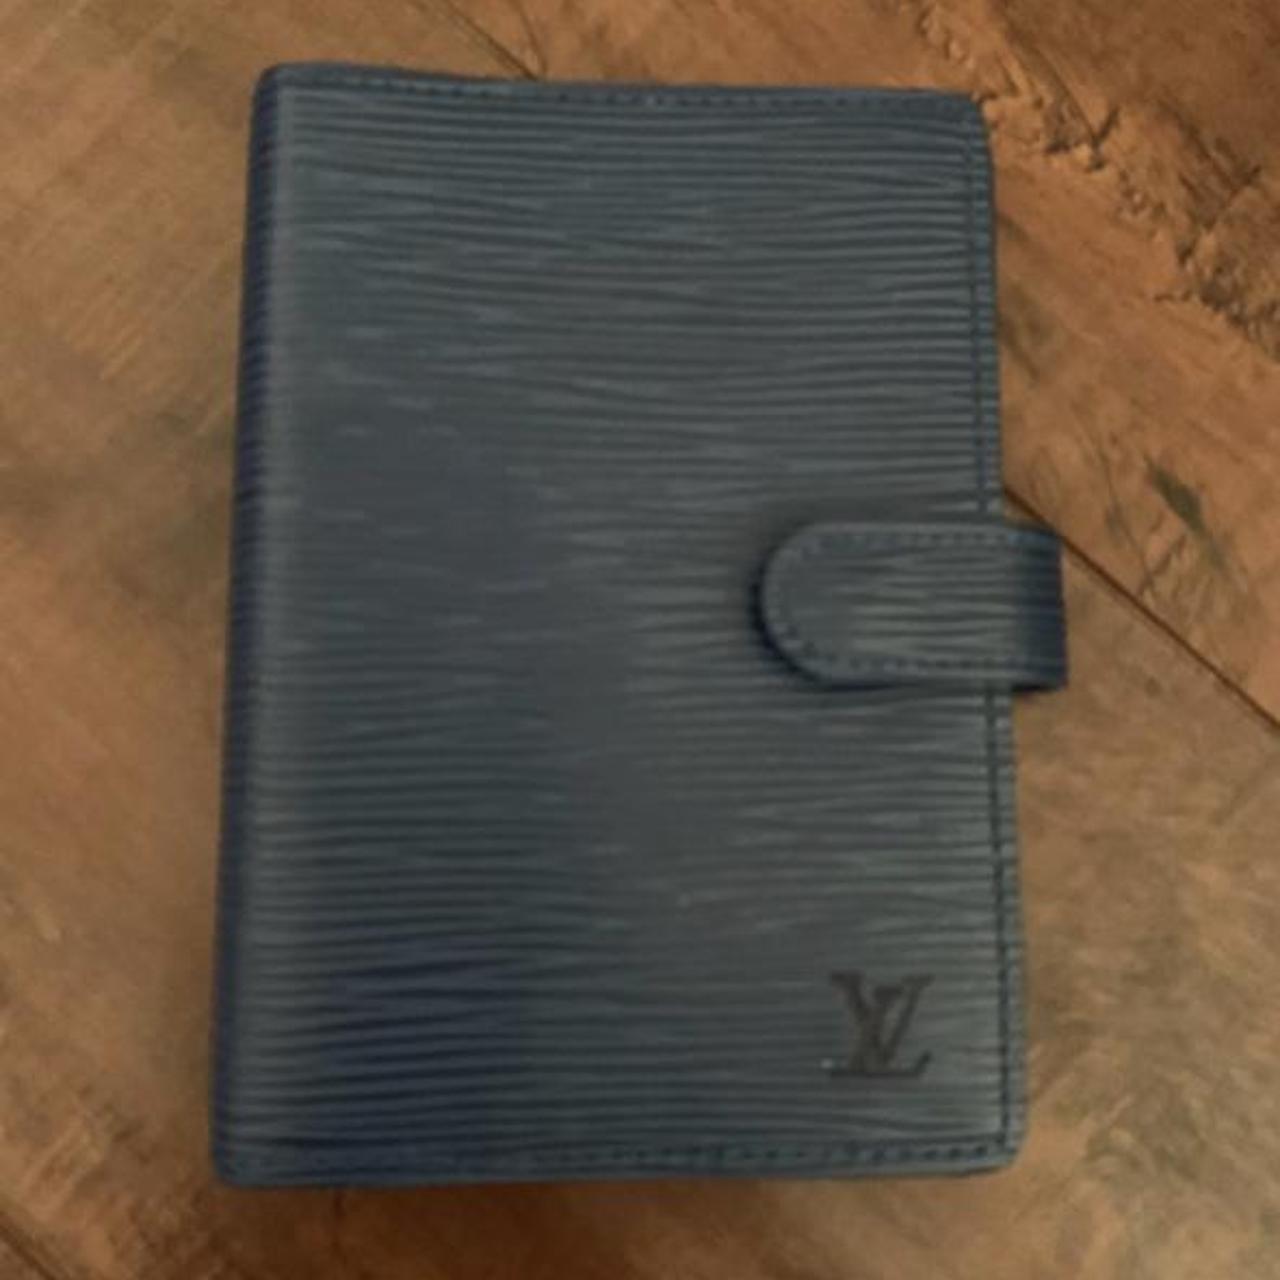 Louis Vuitton mini agenda binder with credit card - Depop